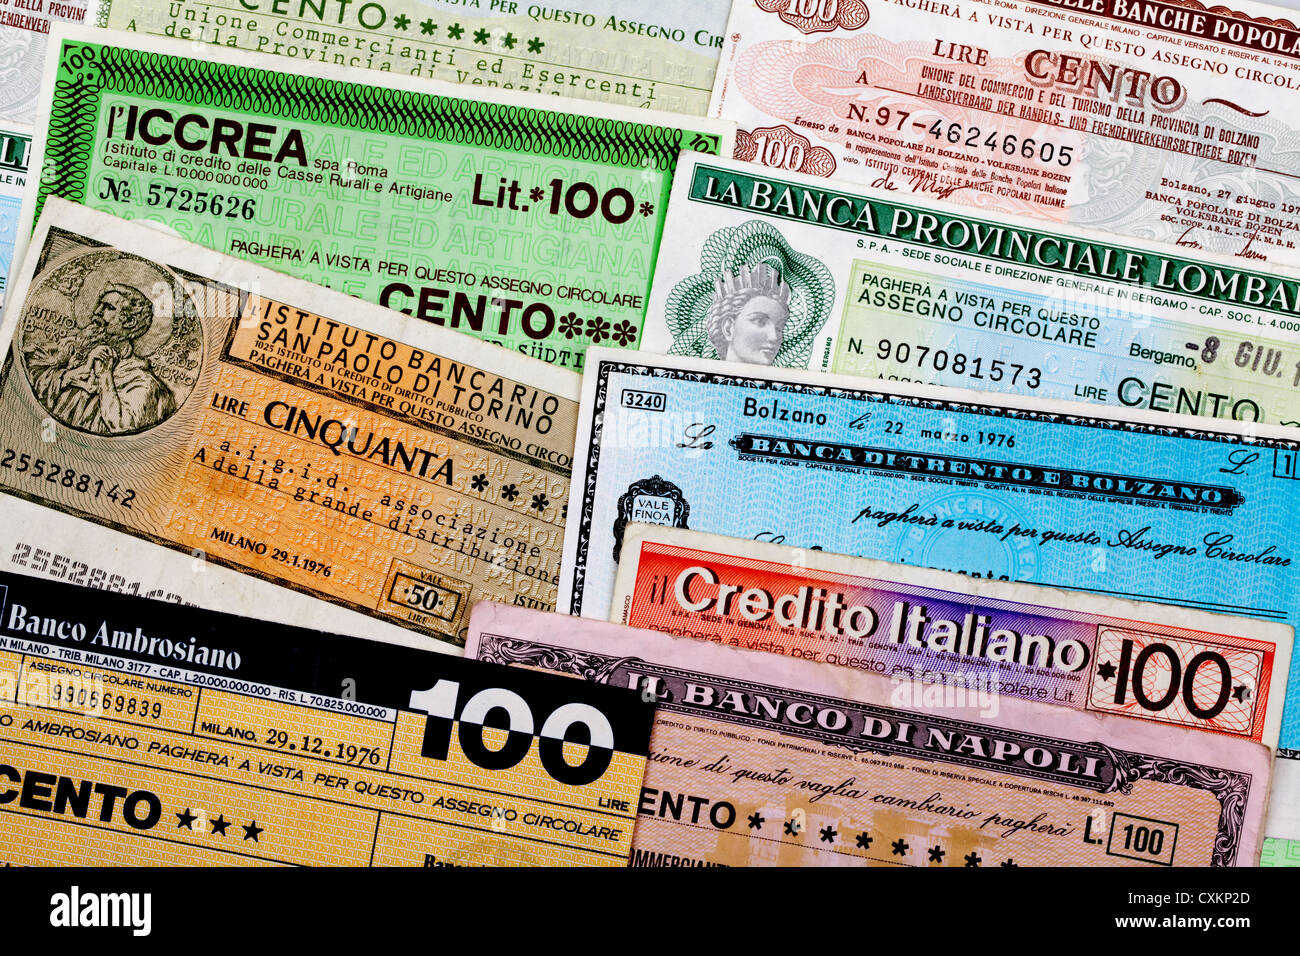 Miniassegni, Italian bank transfer, money order with a low value, Il Banco Ambrosiano, Mailand Stock Photo